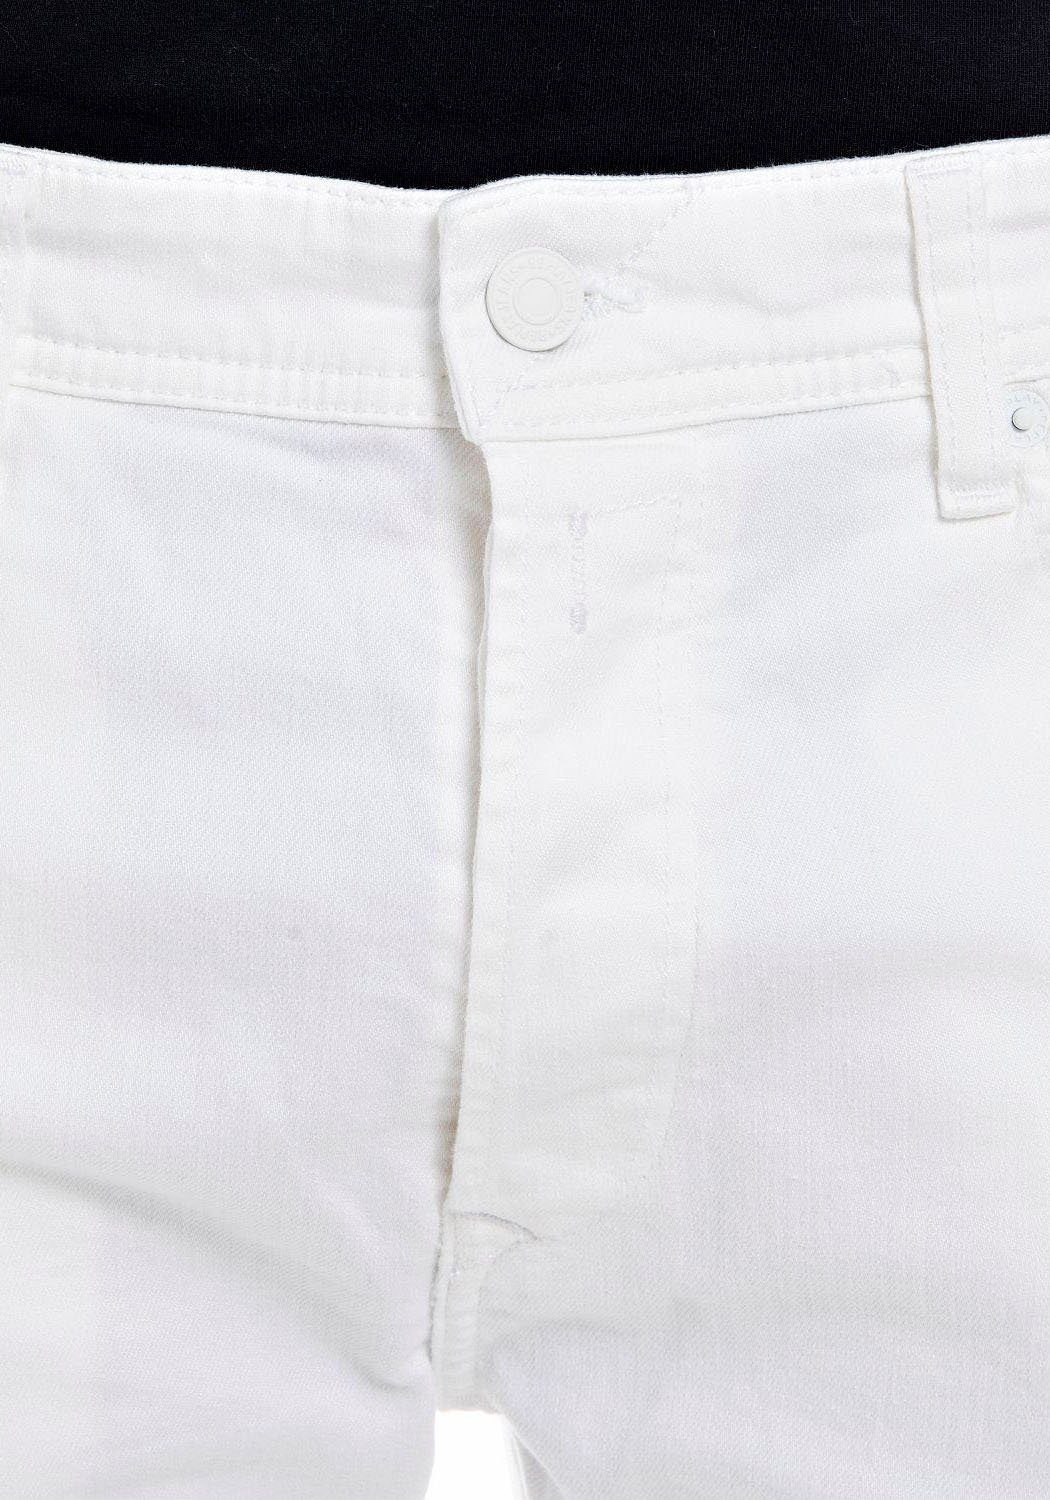 white Replay RBJ.901 Shorts